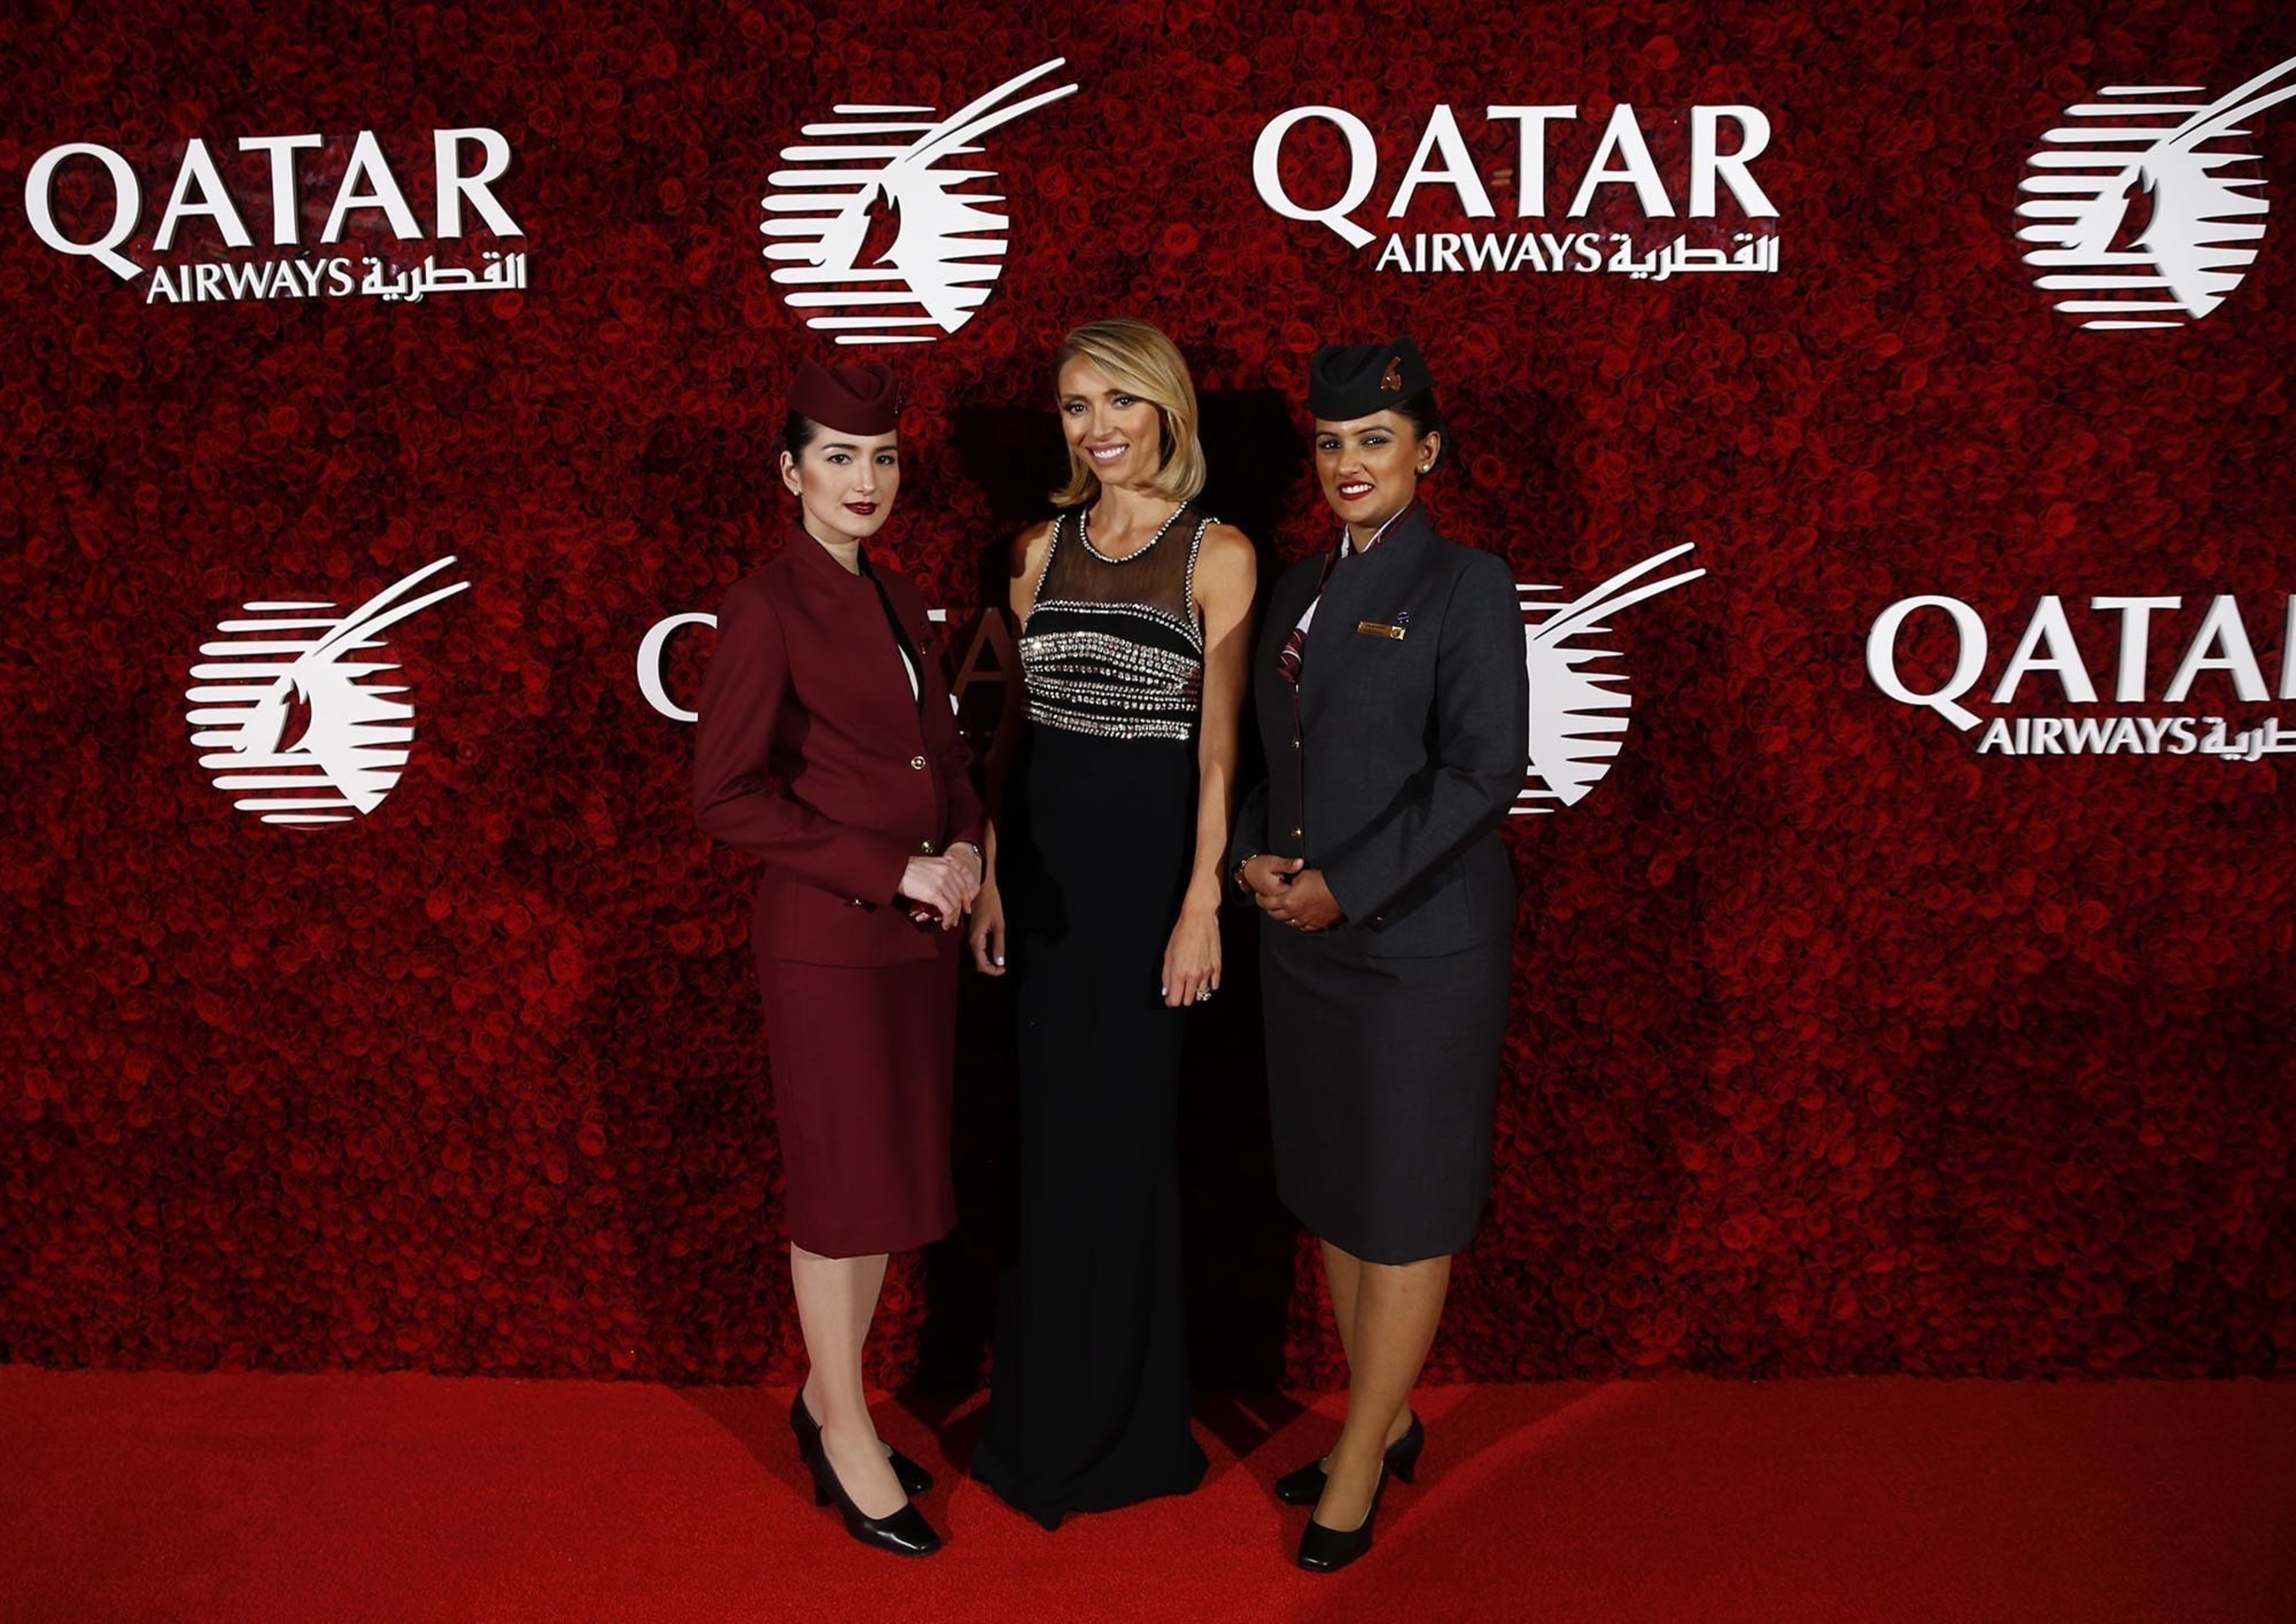 Giuliana Rancic emcees Qatar Airways' Boston launch gala event